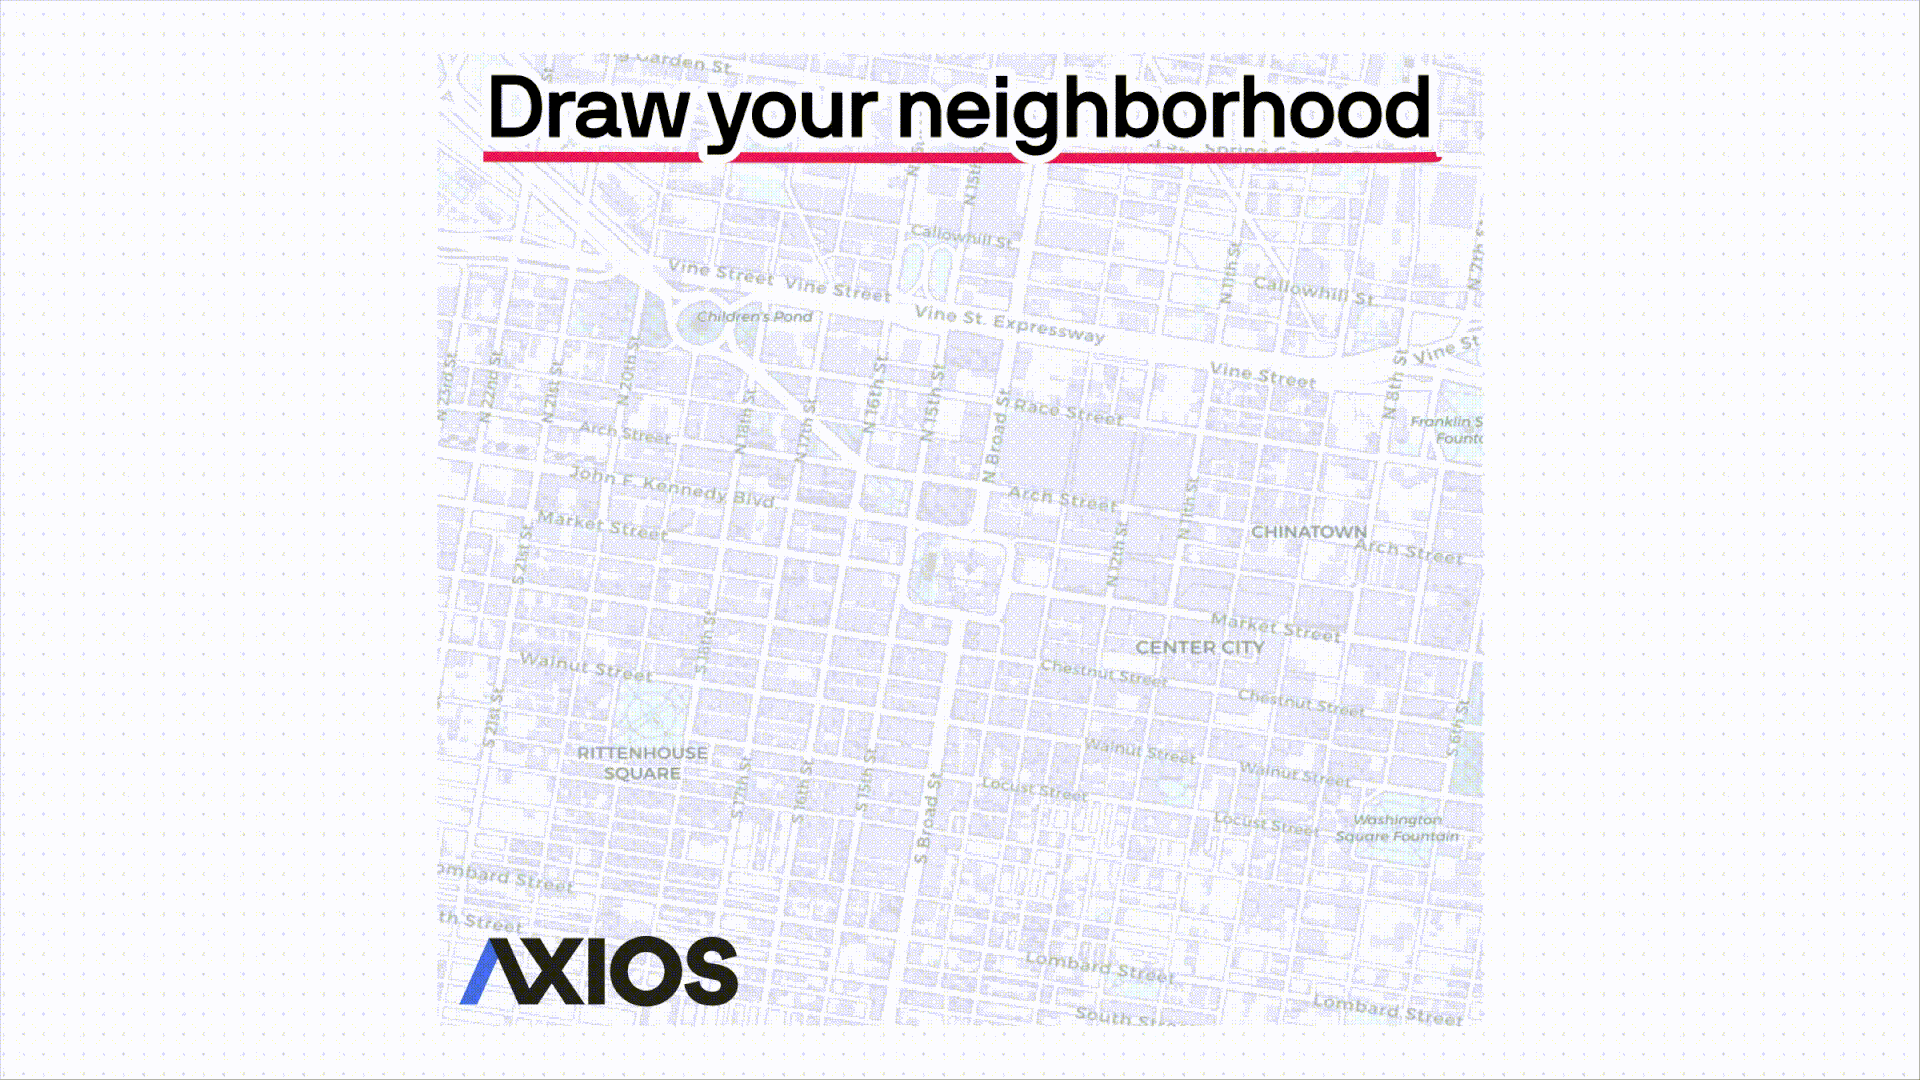 Axios draw your neighborhood game